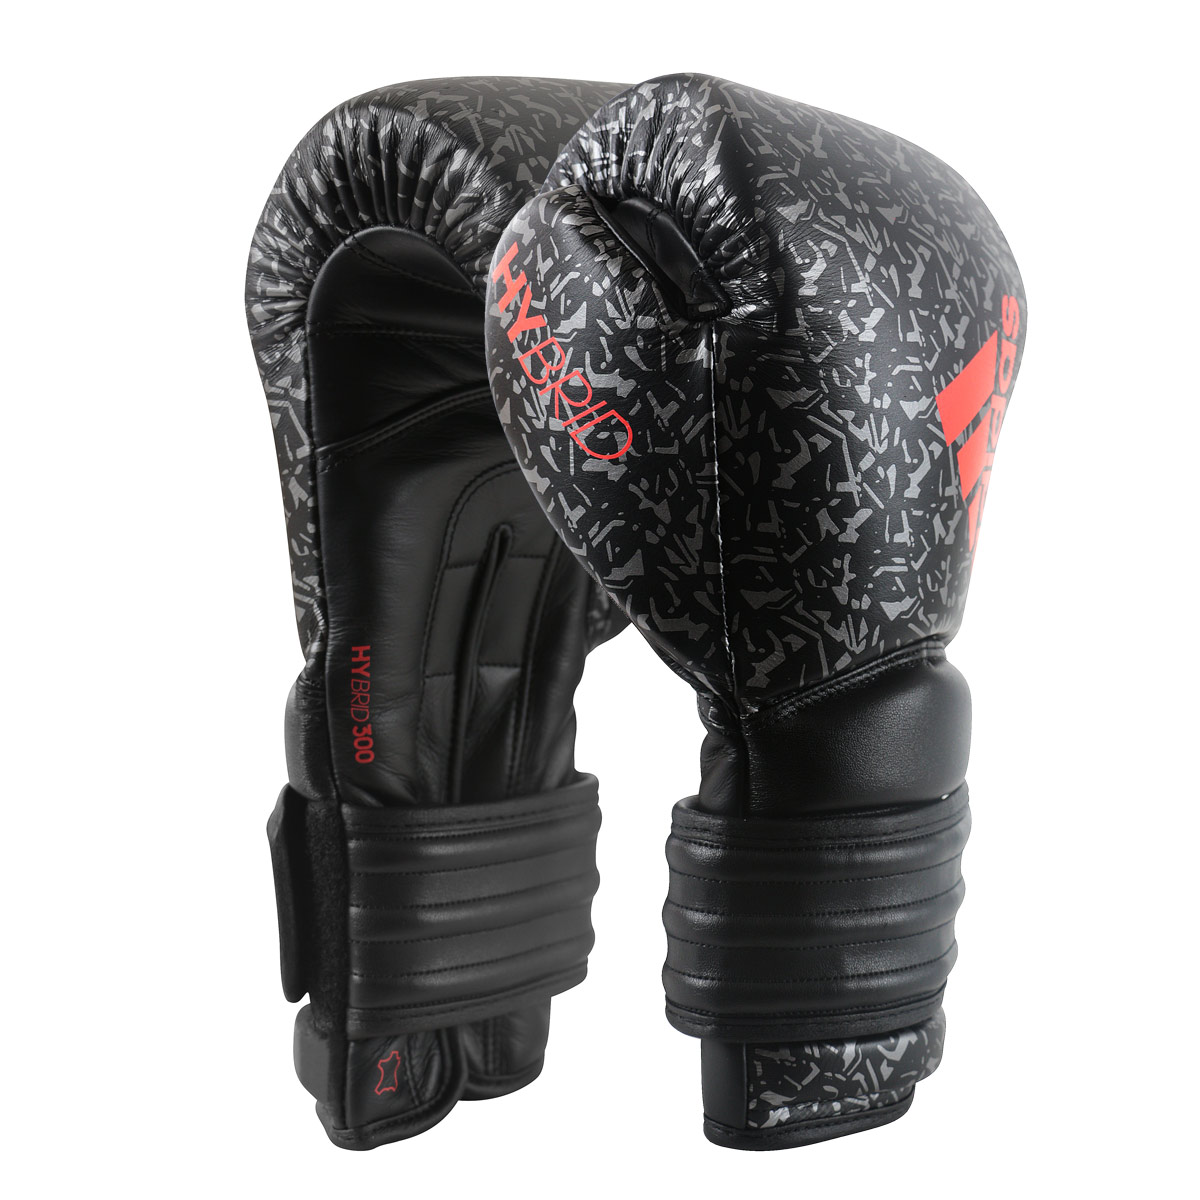 Edition-AAG_001185 Black Hybrid 300 Adidas 12oz Boxing Pro Gloves Ltd